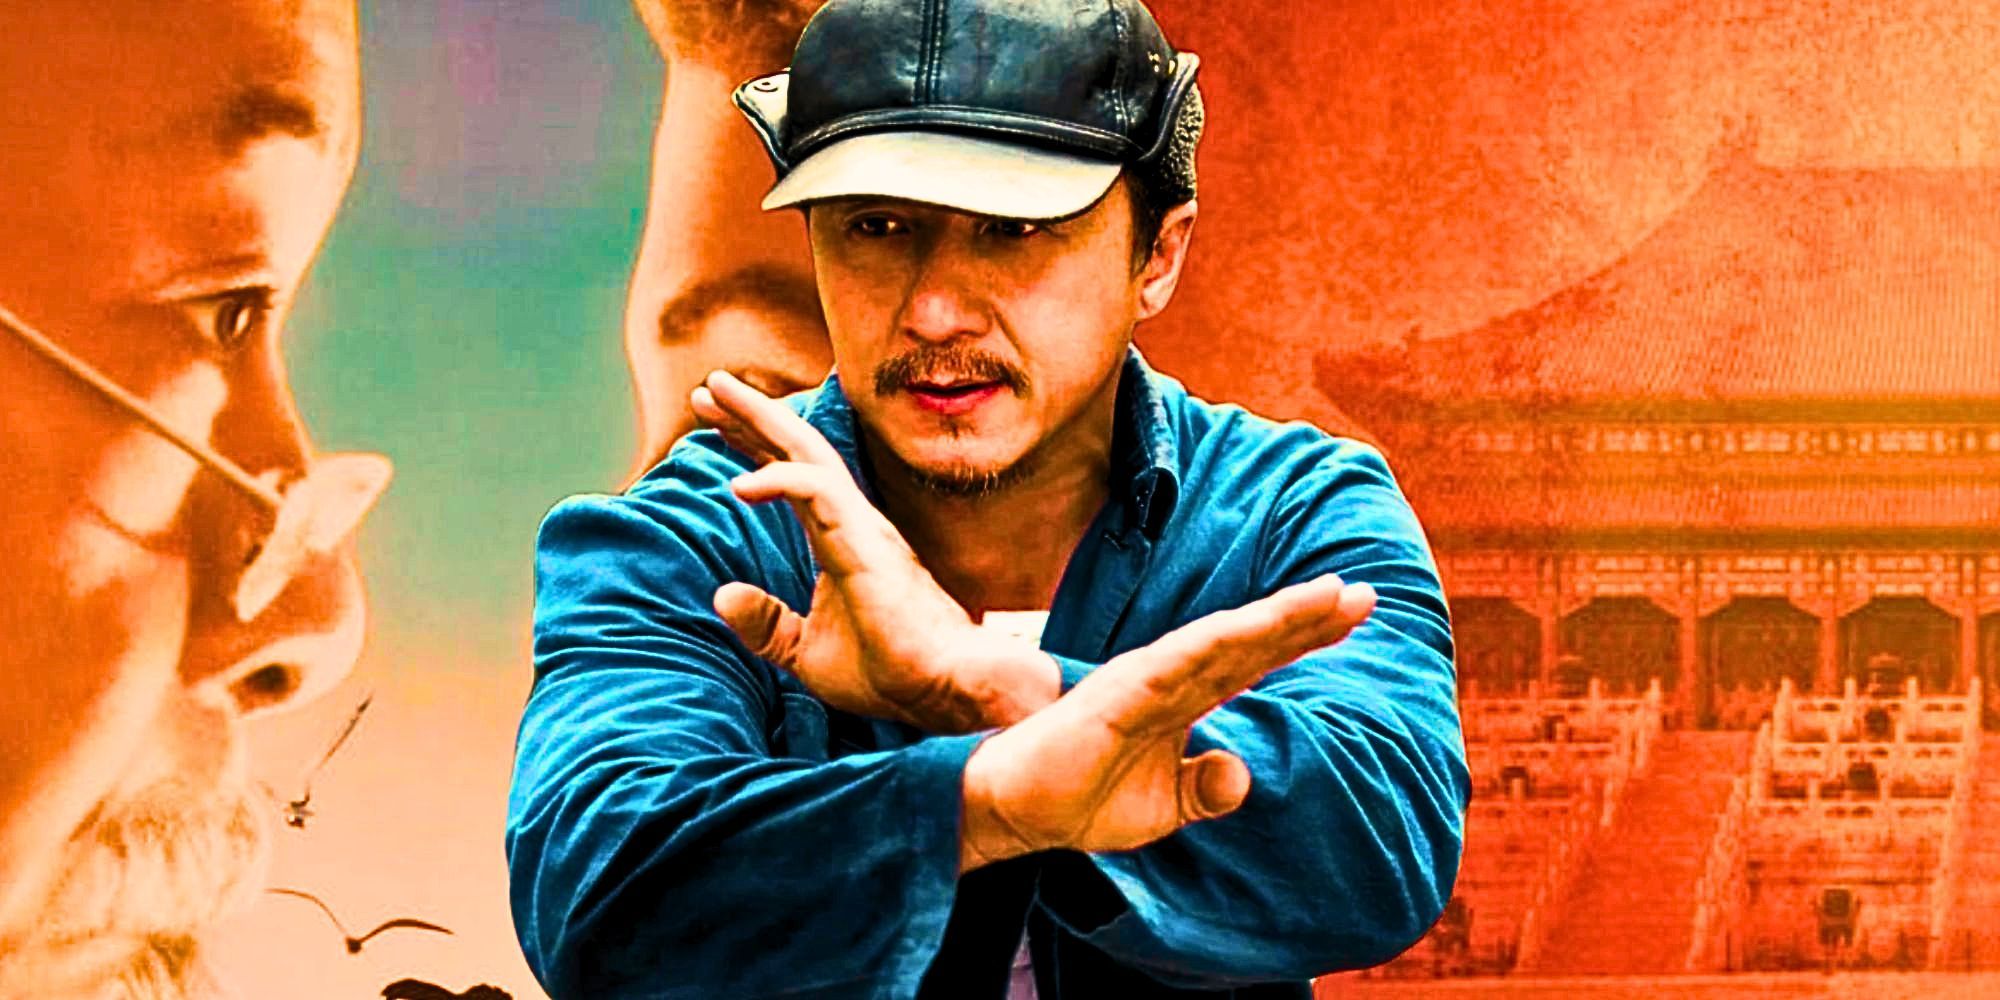 Jackie Chan as Mr. Han against a backdrop of blended Karate Kid posters